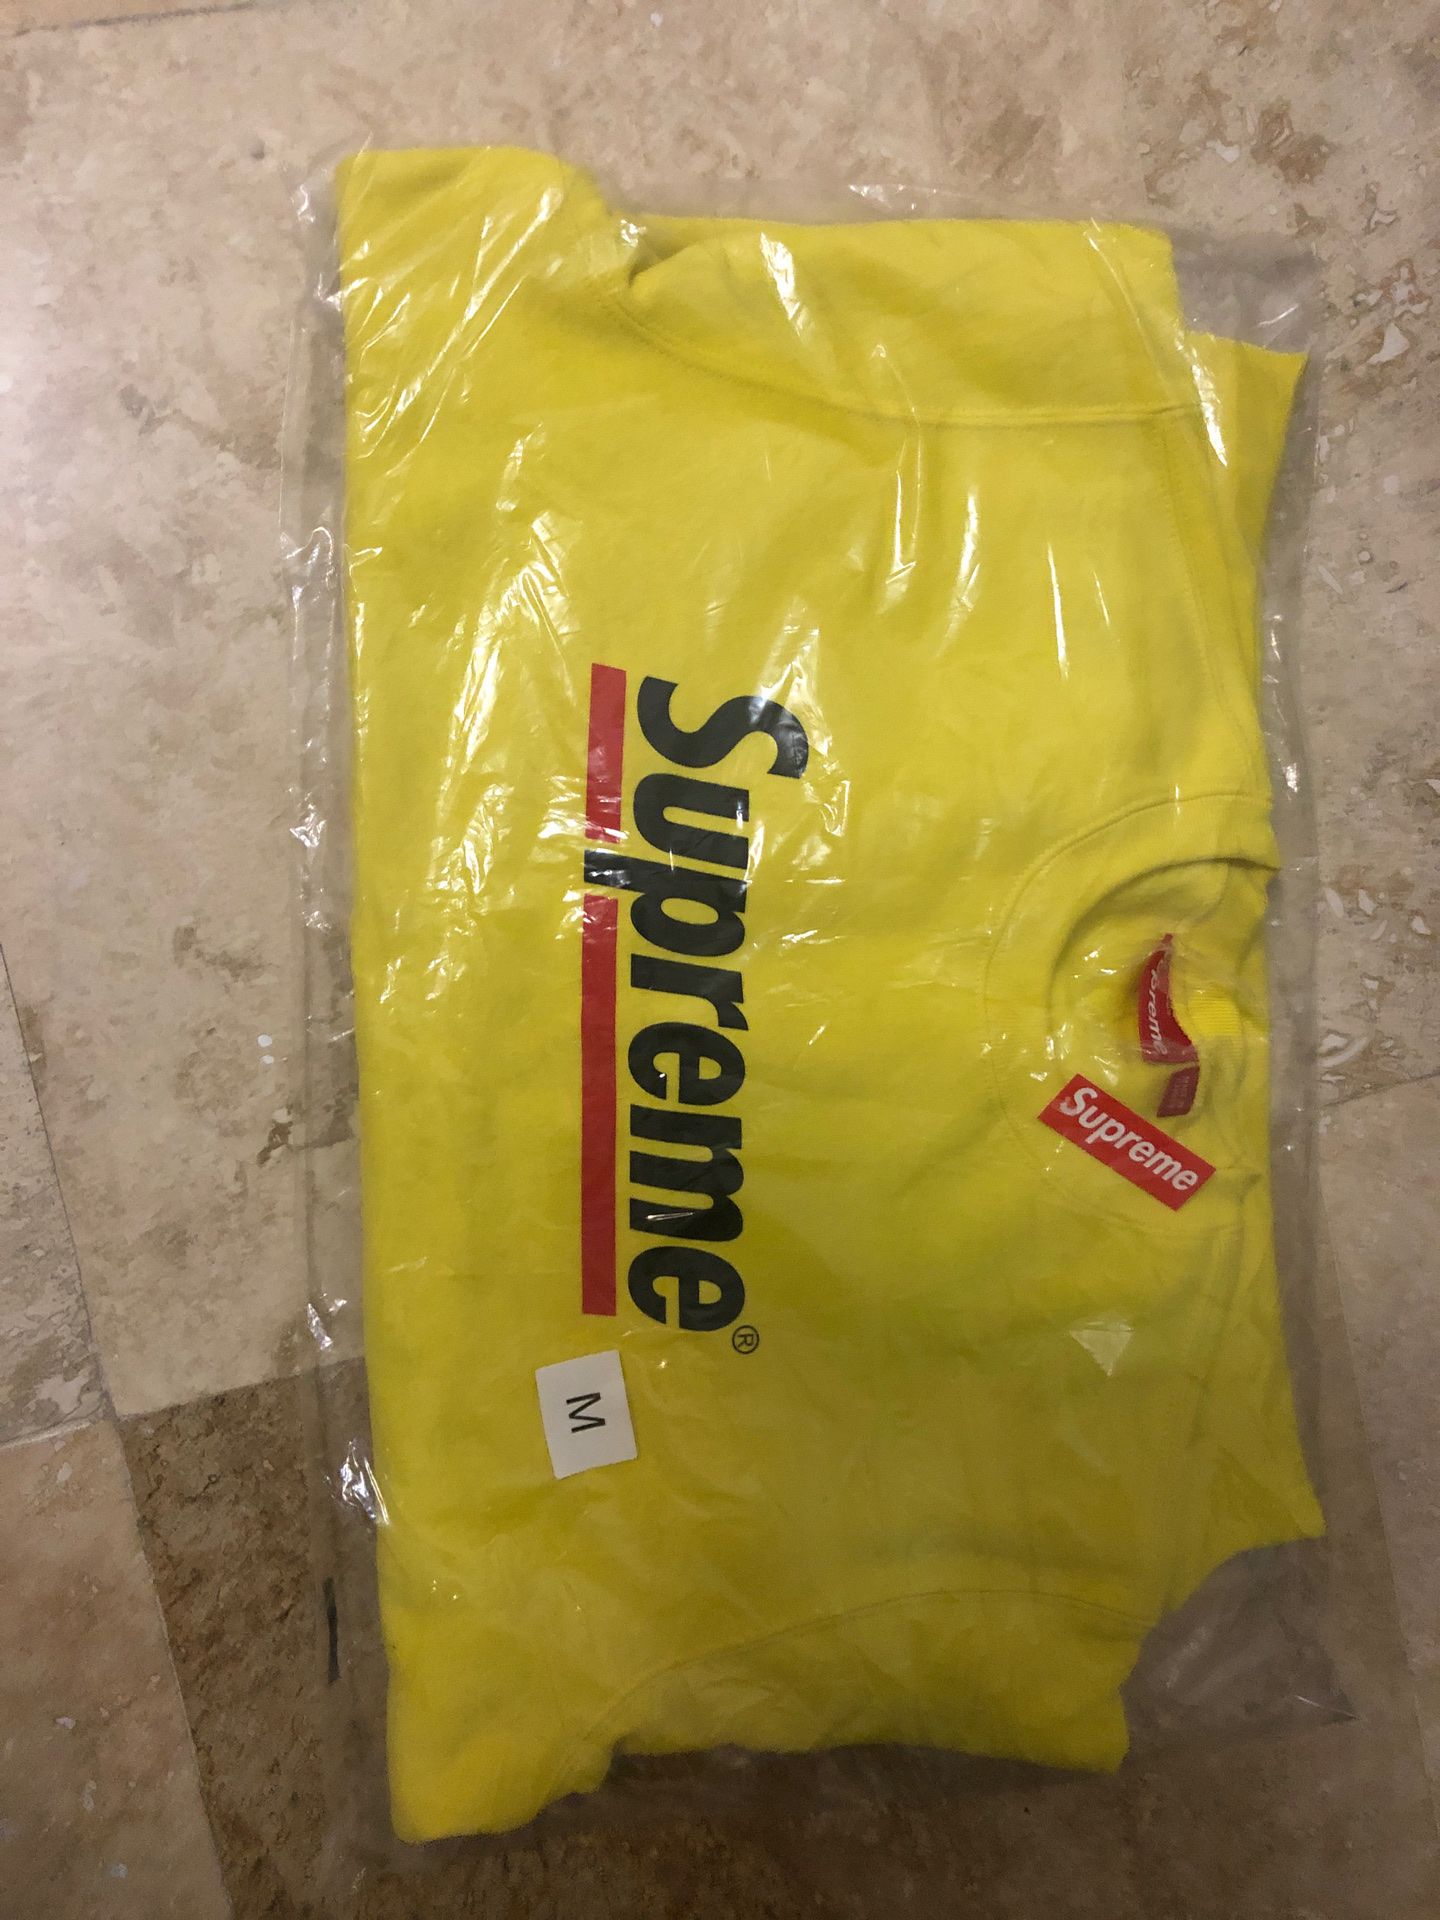 Supreme Underline Crewneck, Colorway:Lemon, Size:Medium 100% Authentic